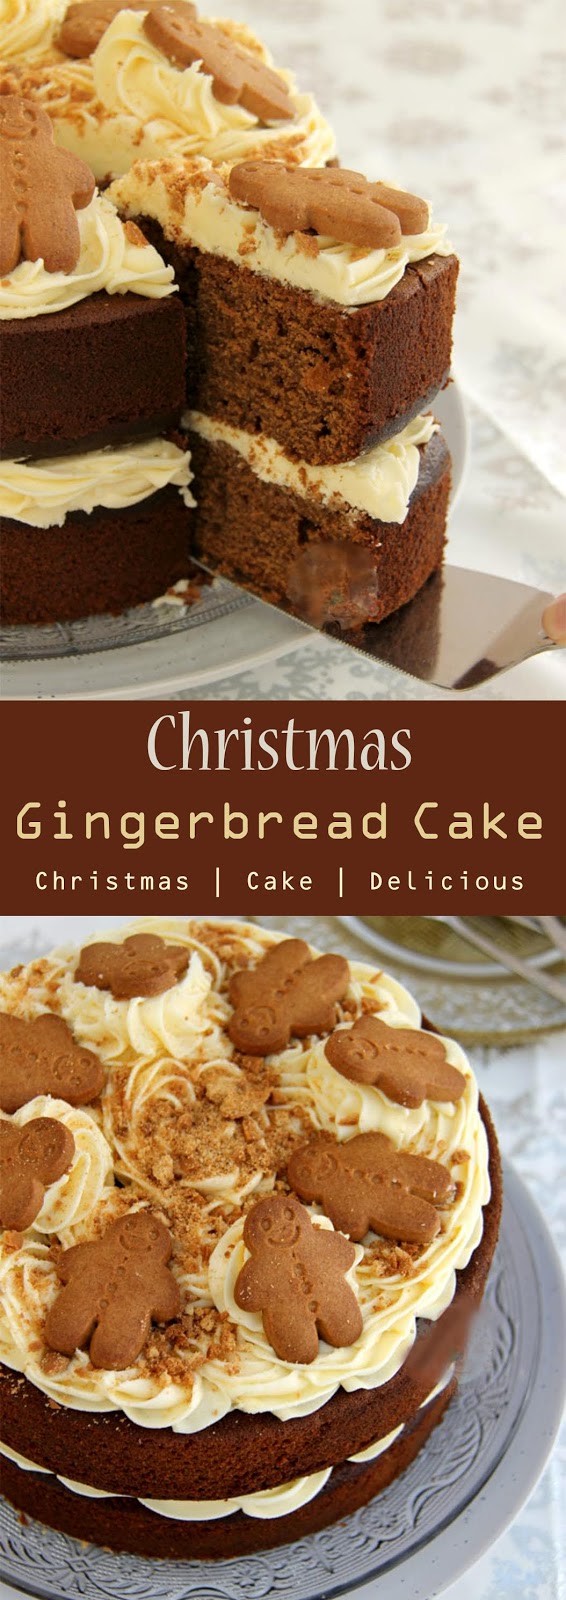 Christmas Gingerbread Cake